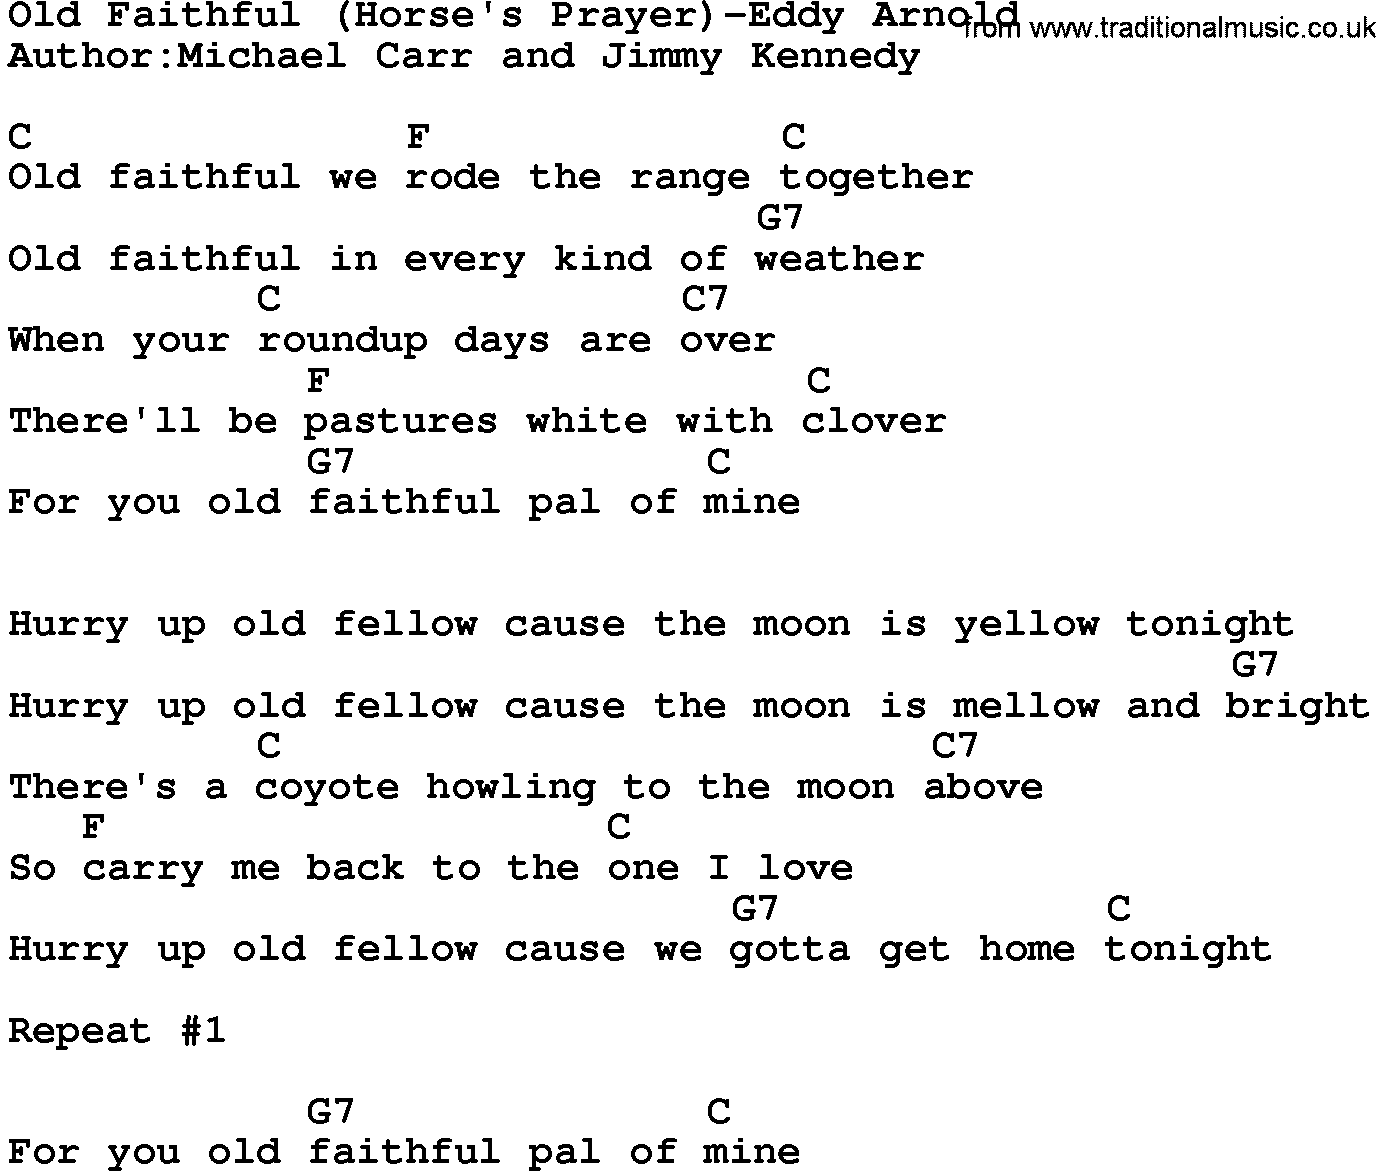 Country music song: Old Faithful(Horse's Prayer)-Eddy Arnold lyrics and chords